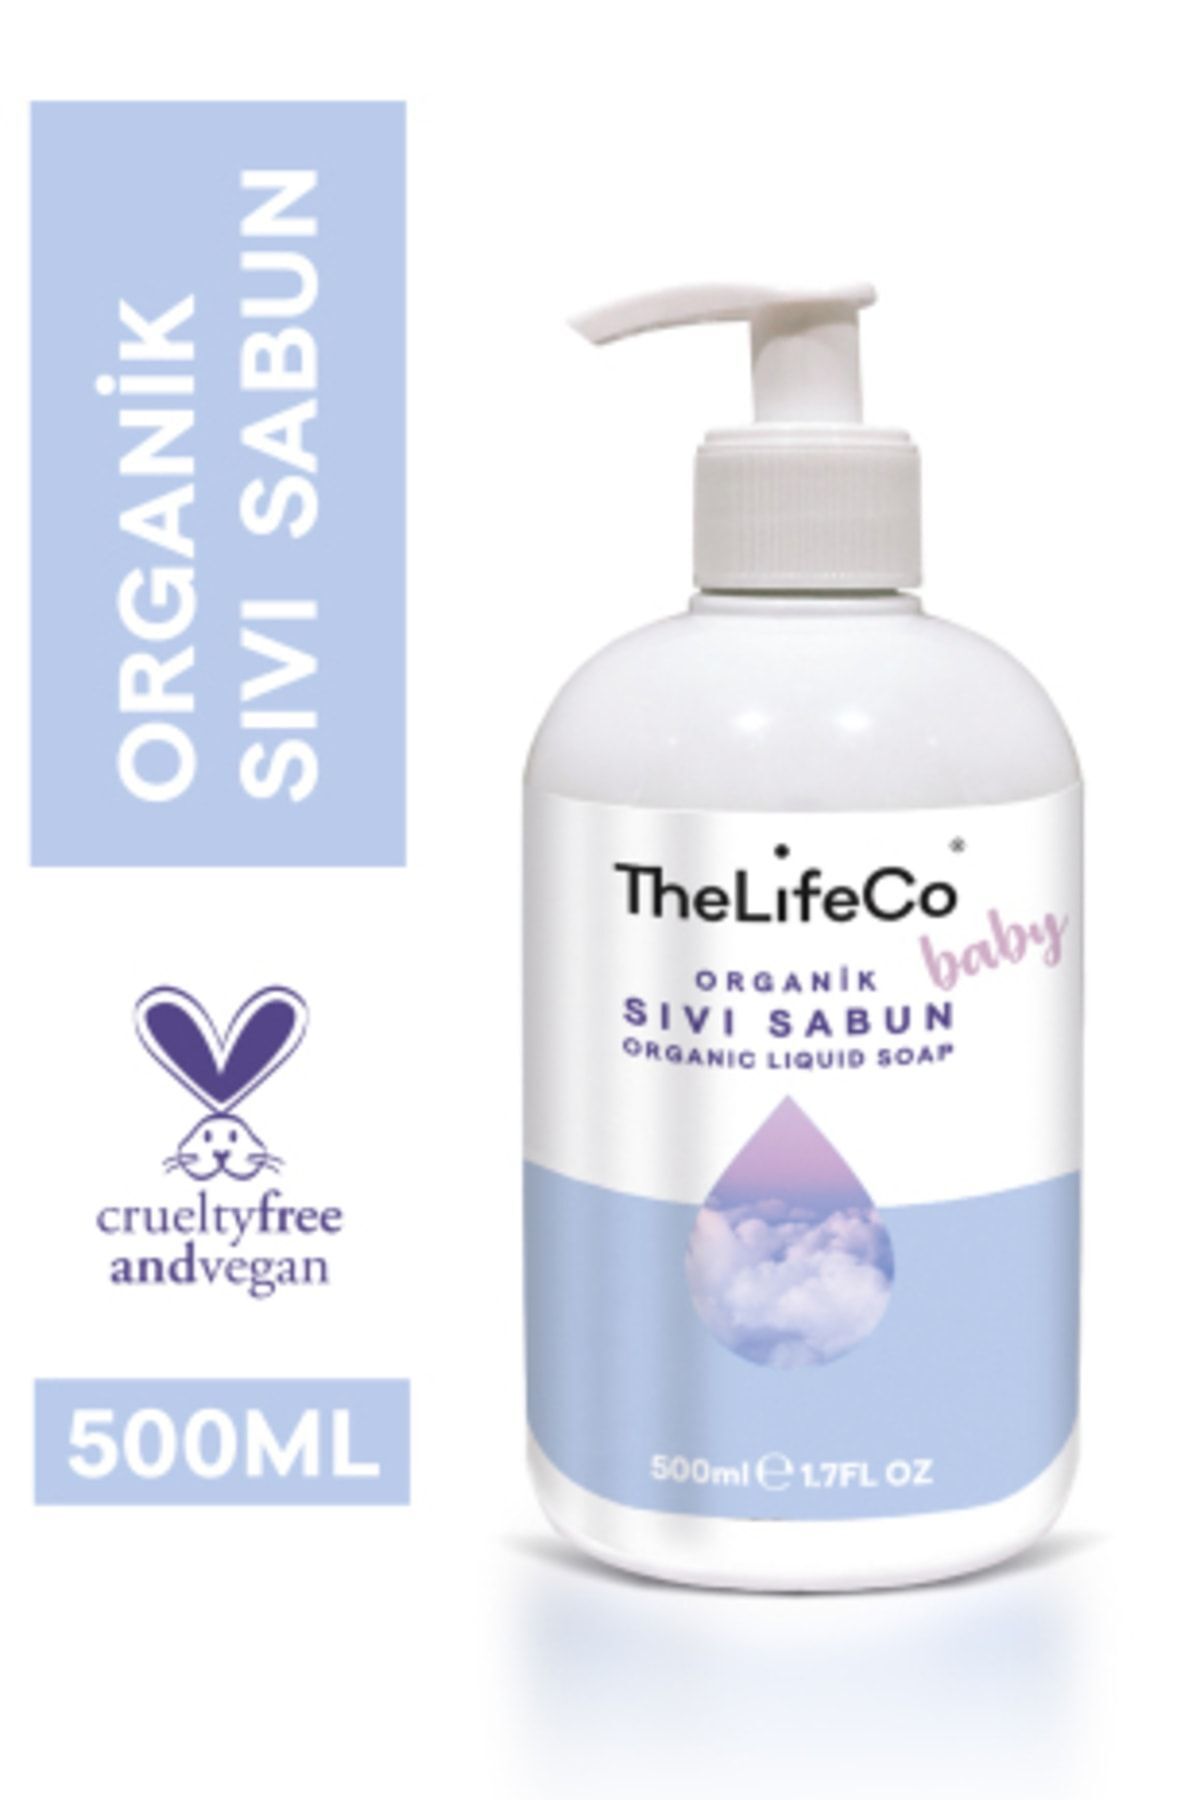 TheLifeCo Parfümsüz Baby Organik Sıvı Sabun 500 ml